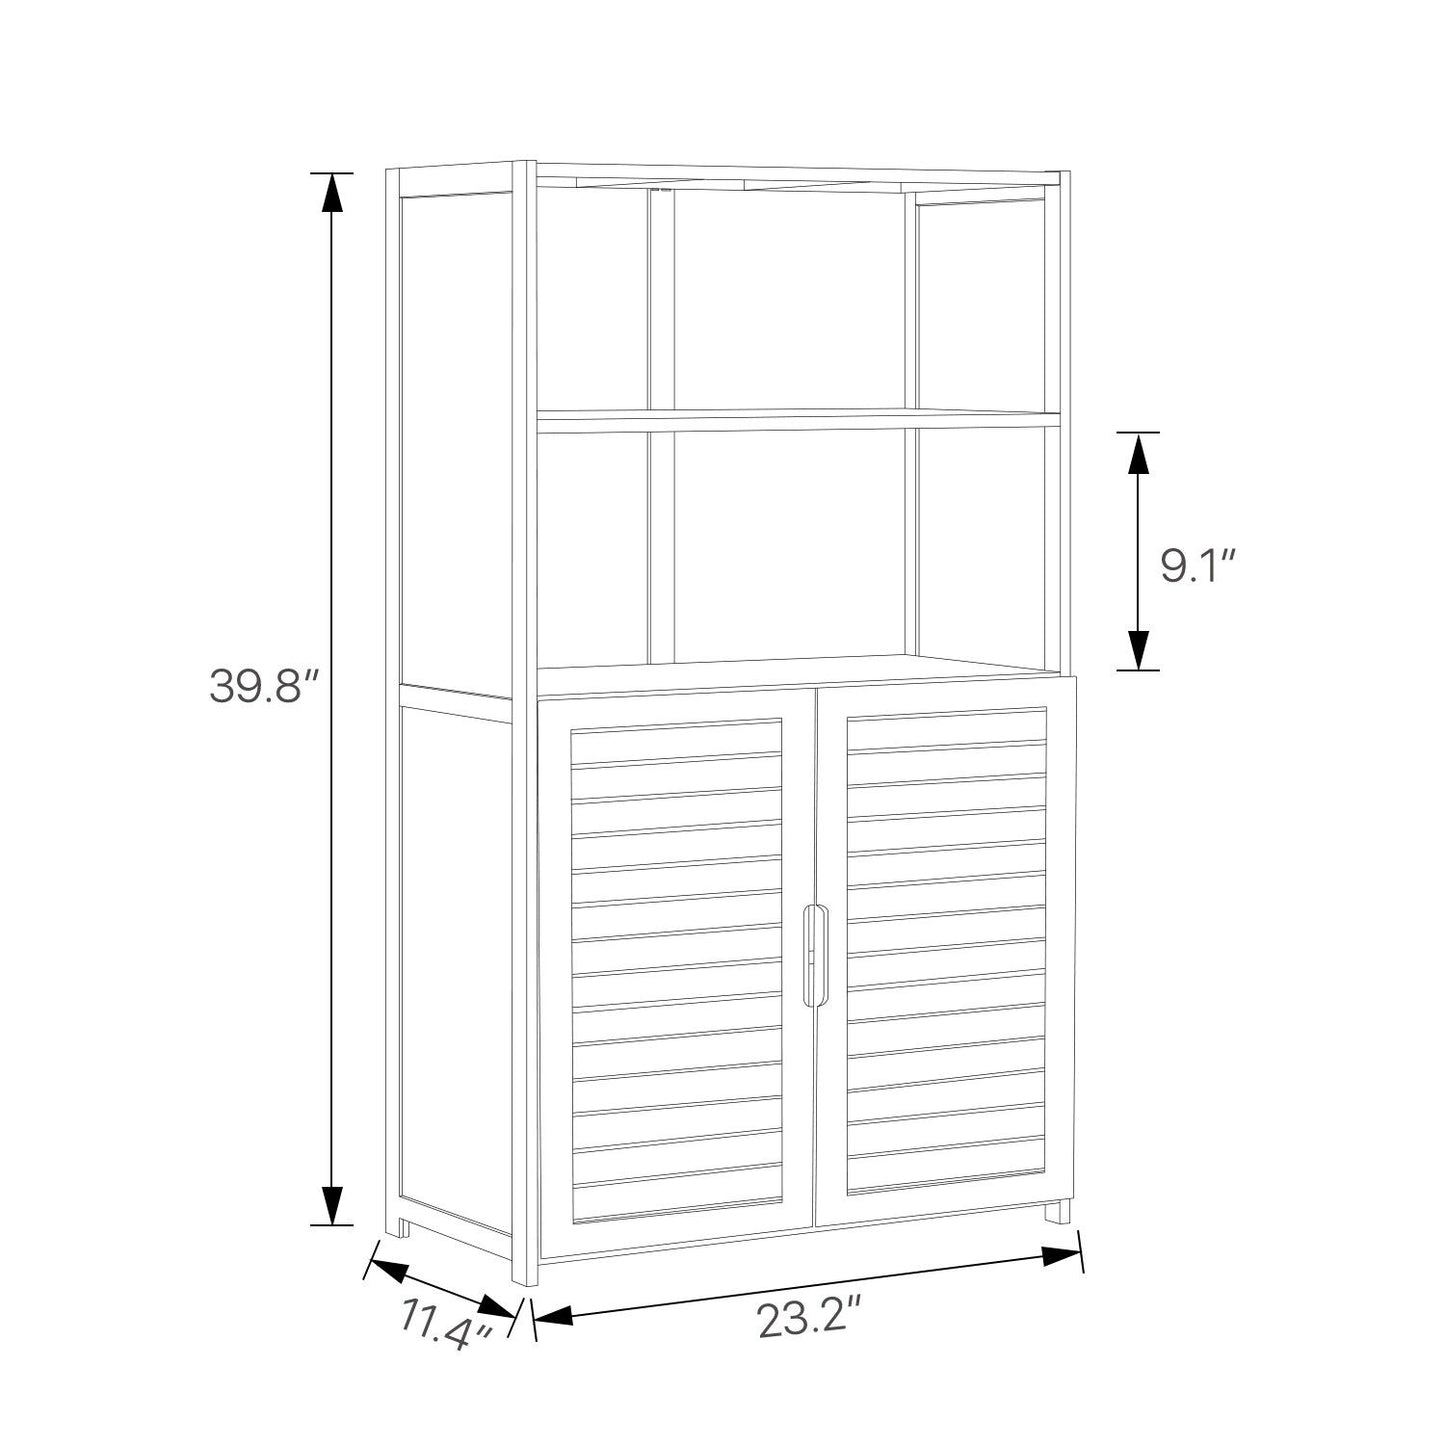 Multi-Functional Freestanding Display Shelf - with Bottom Cabinet Storage - 24" - Brown